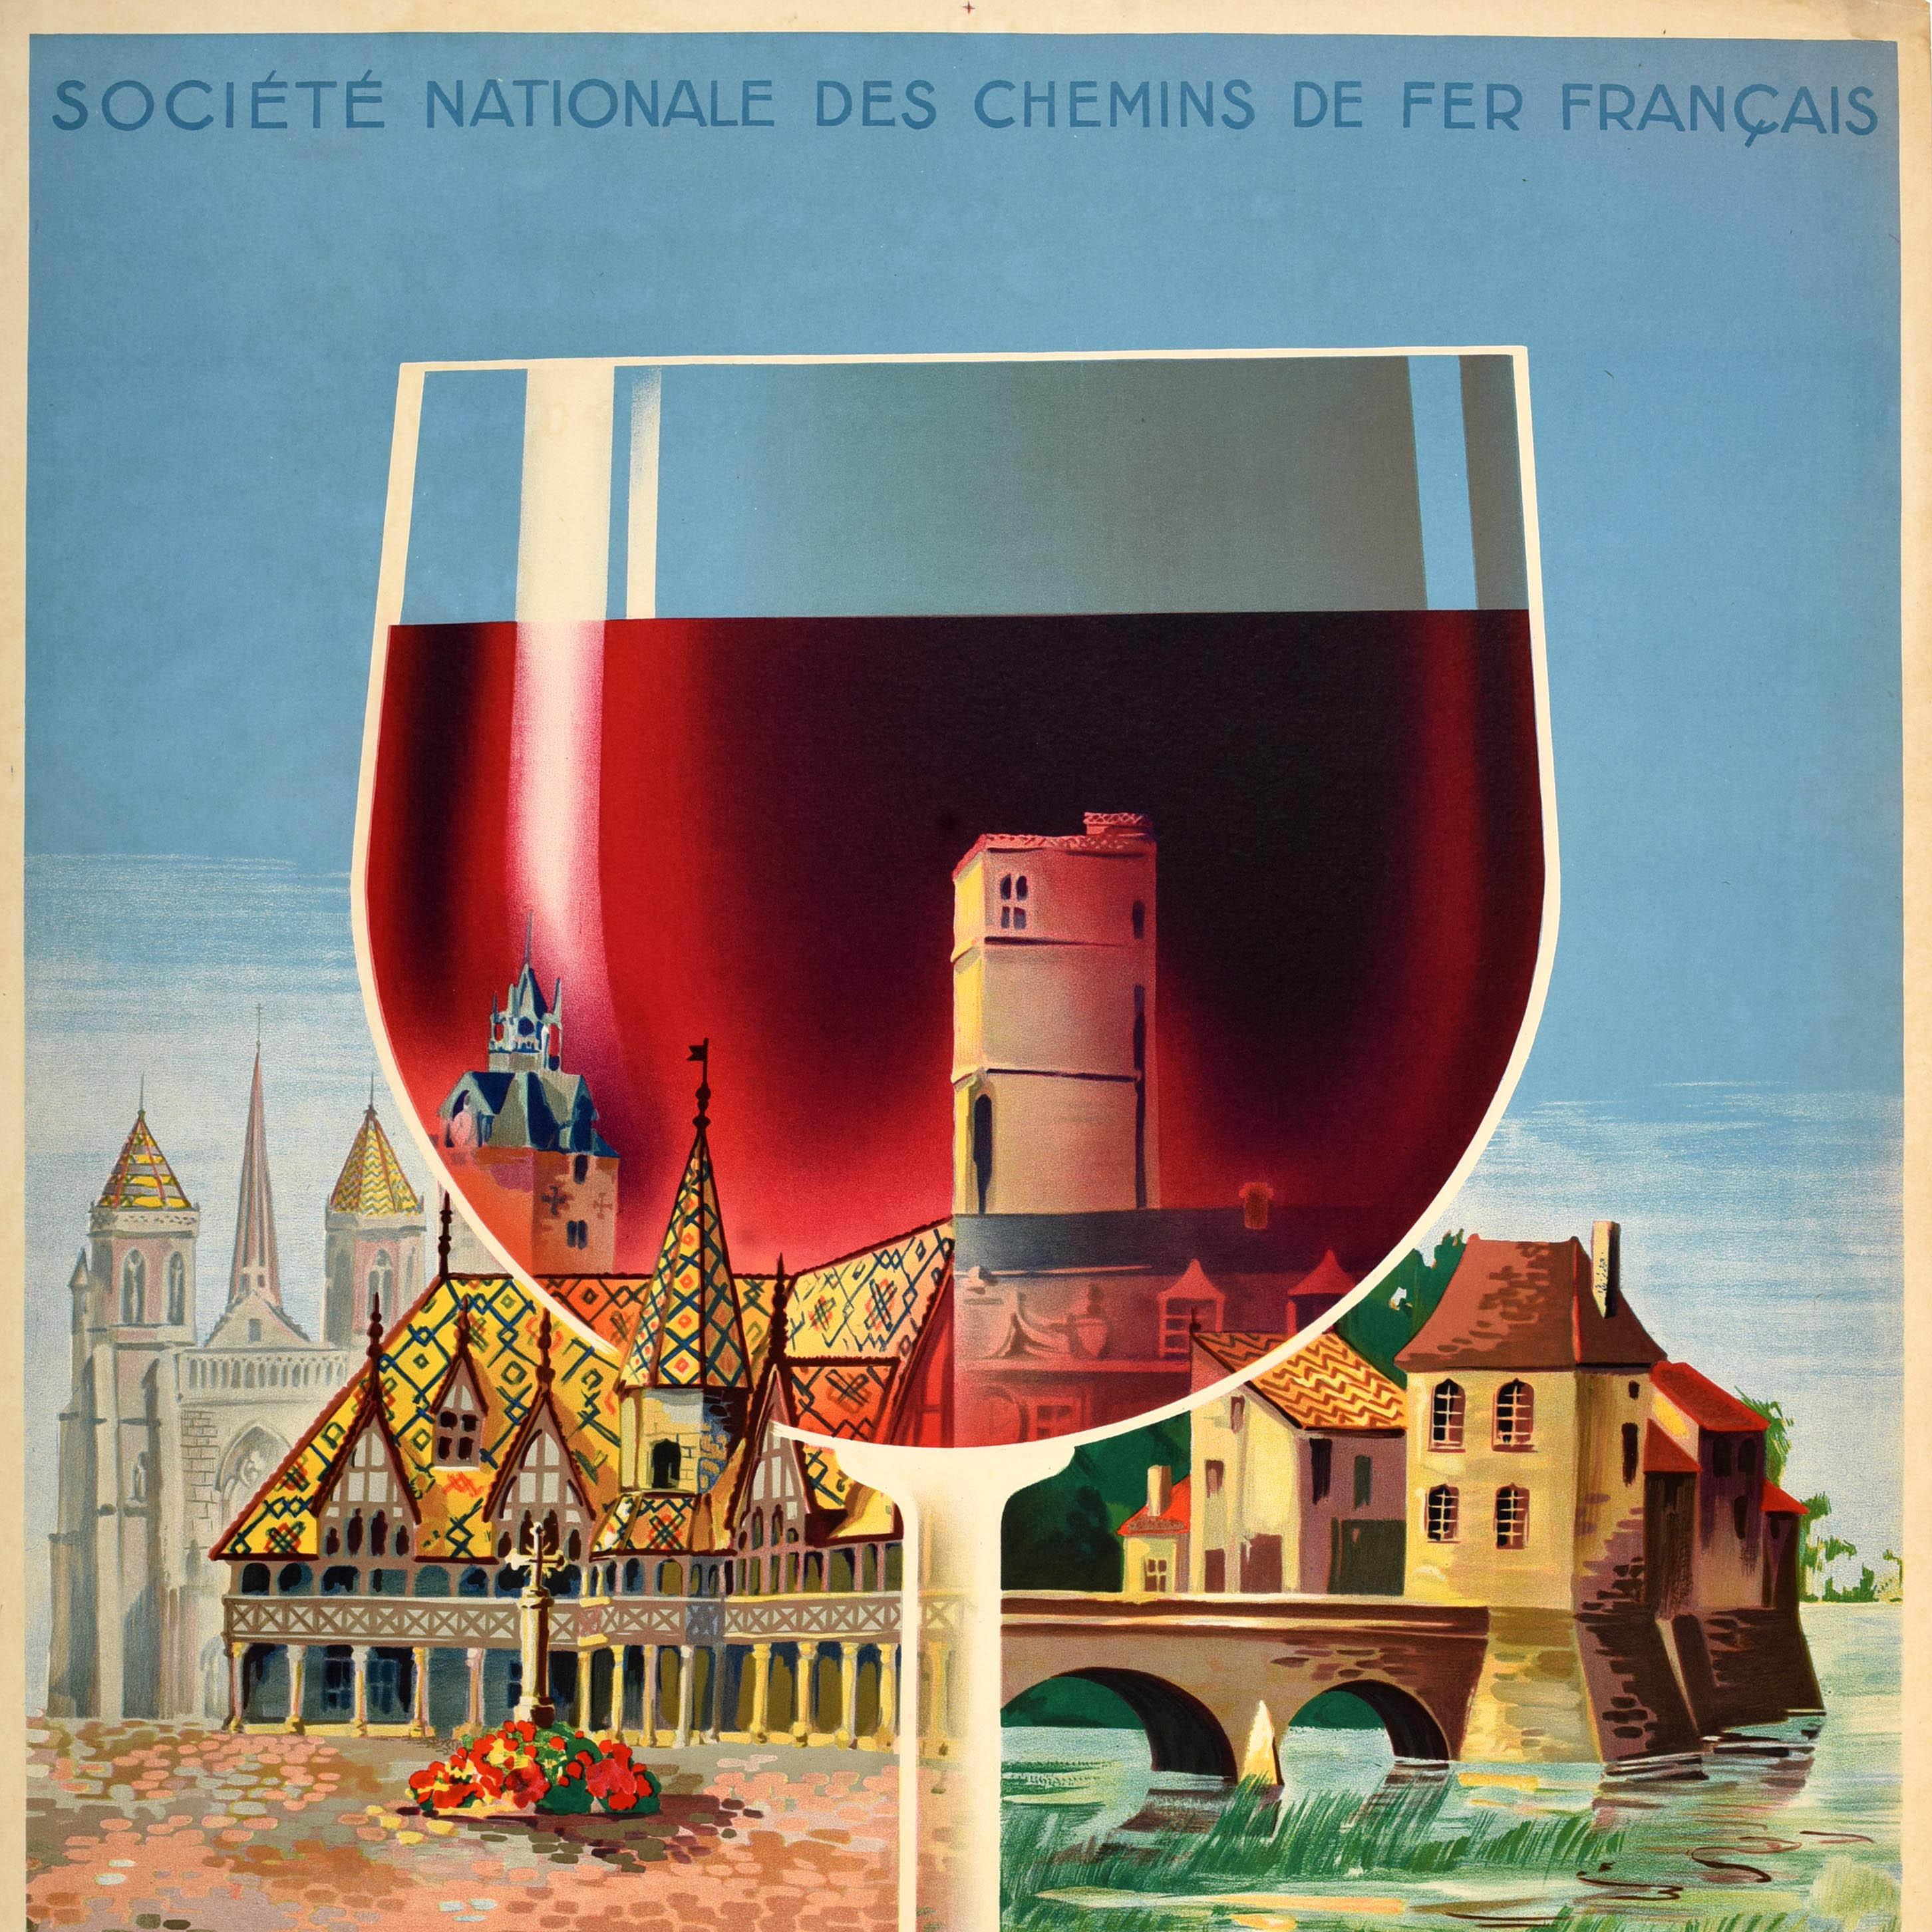 French Original Vintage Train Travel Poster Bourgogne Burgundy Wine SNCF Railway France For Sale